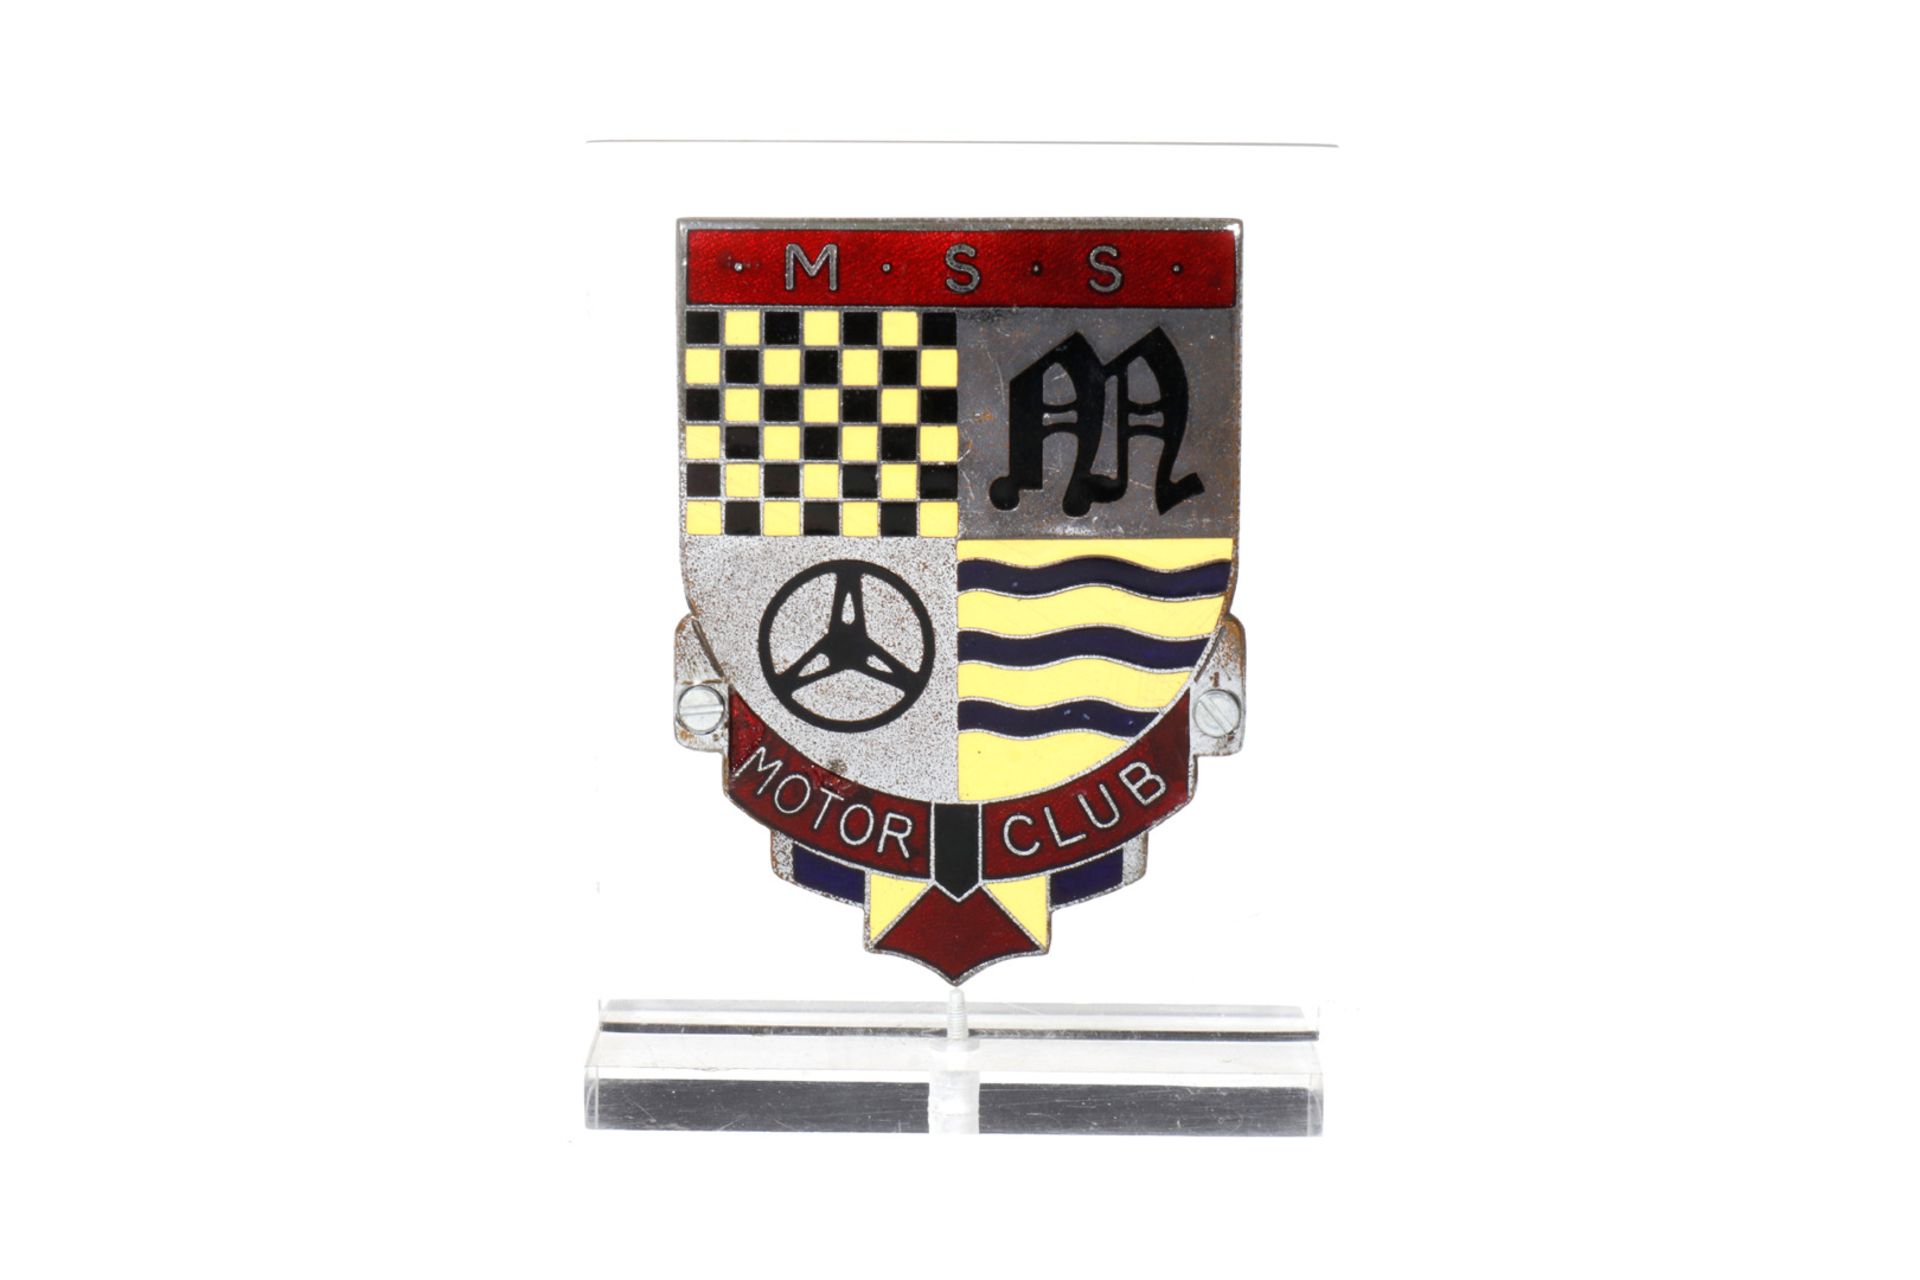 Badge ”MSS Motor Club”